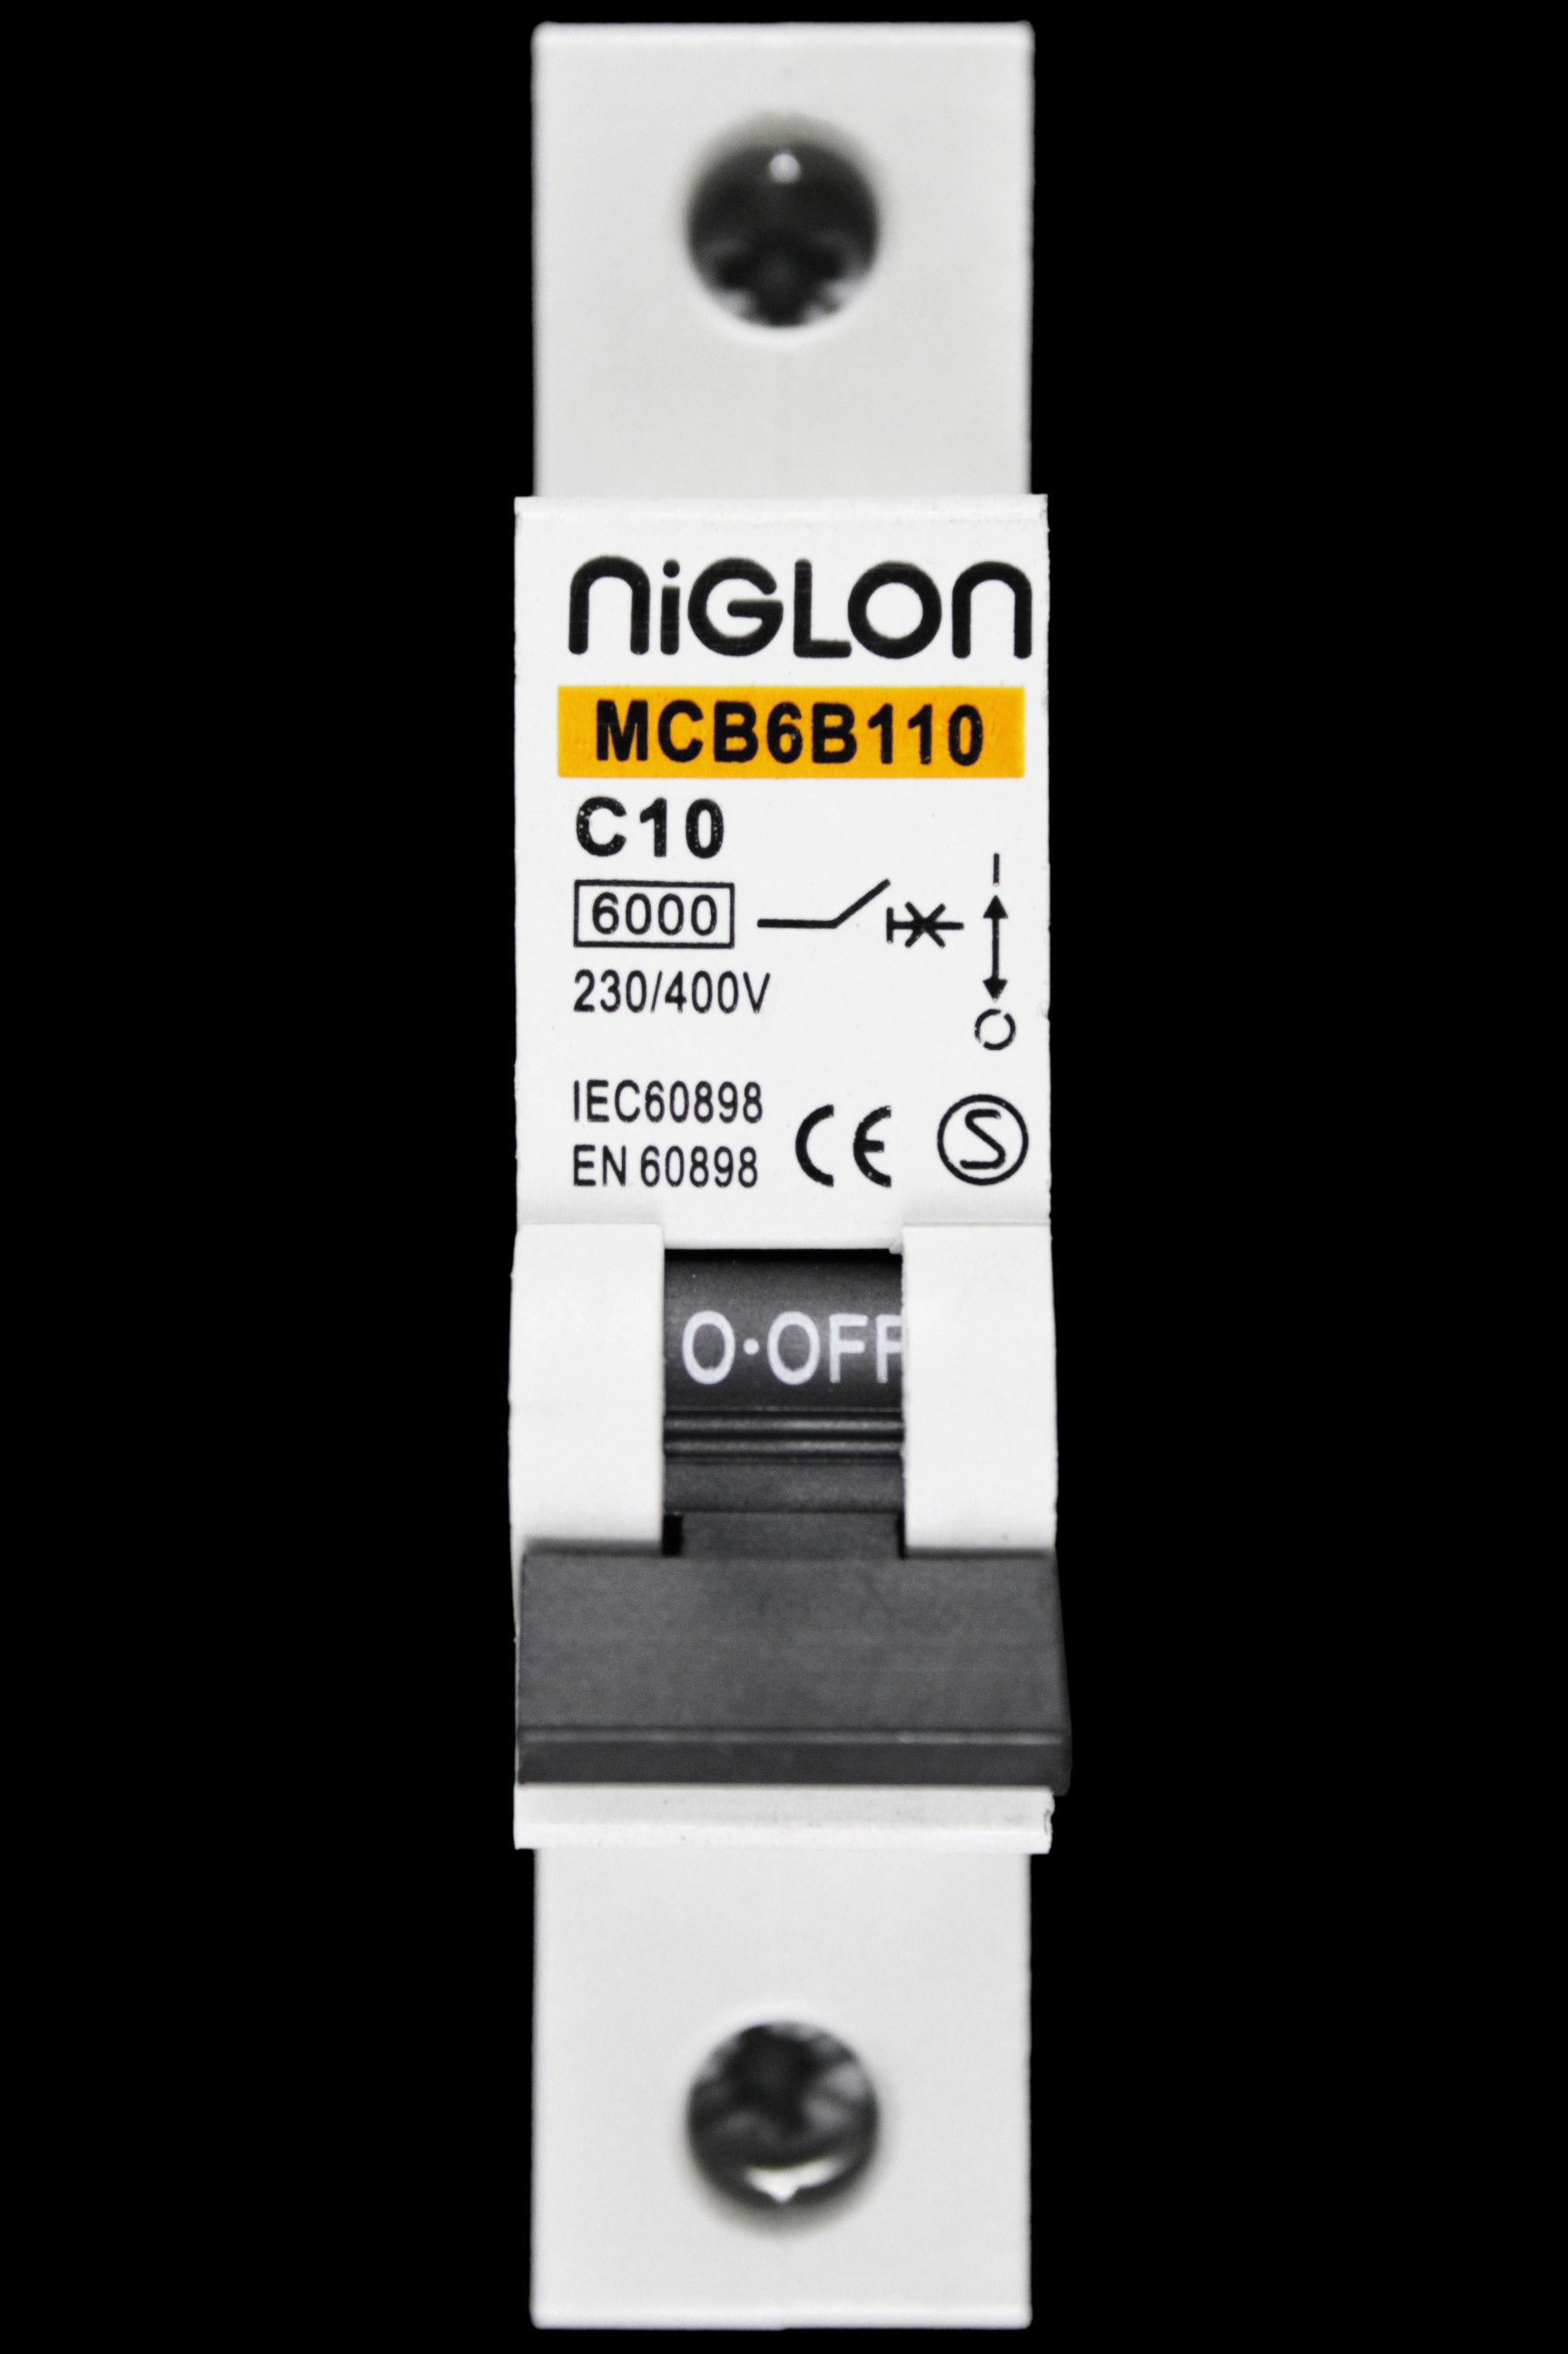 NIGLON 10 AMP CURVE C 6kA MCB CIRCUIT BREAKER MCB6B110